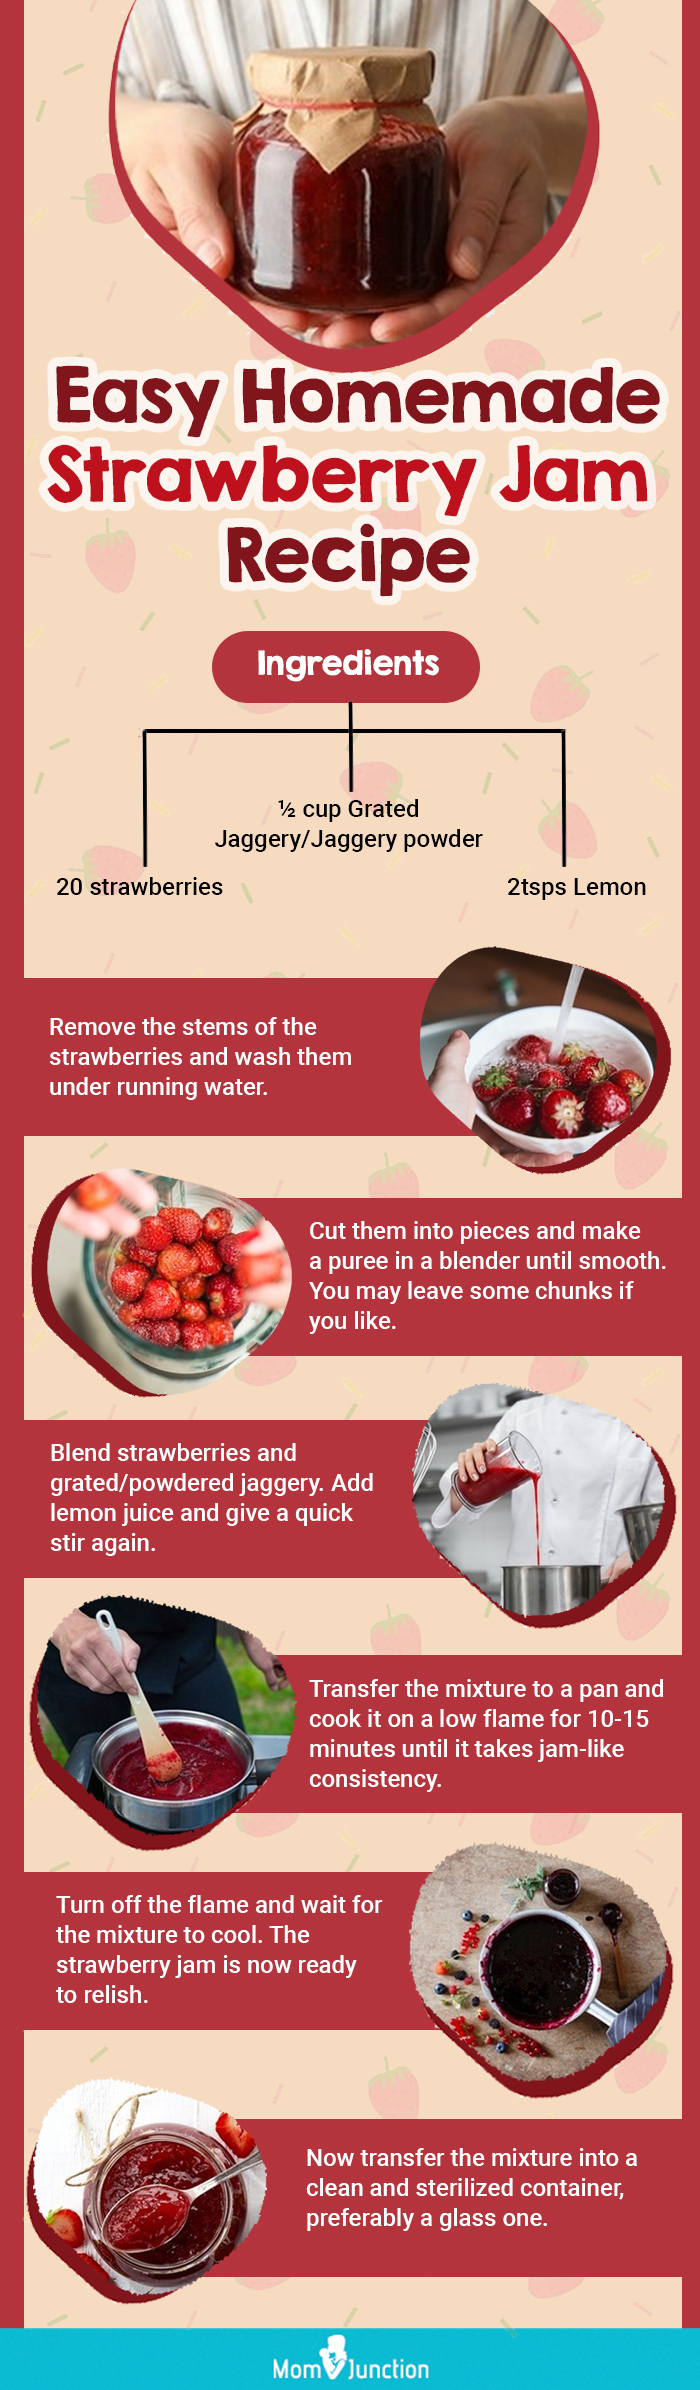 easy homemade strawberry jam recipe [infographic]